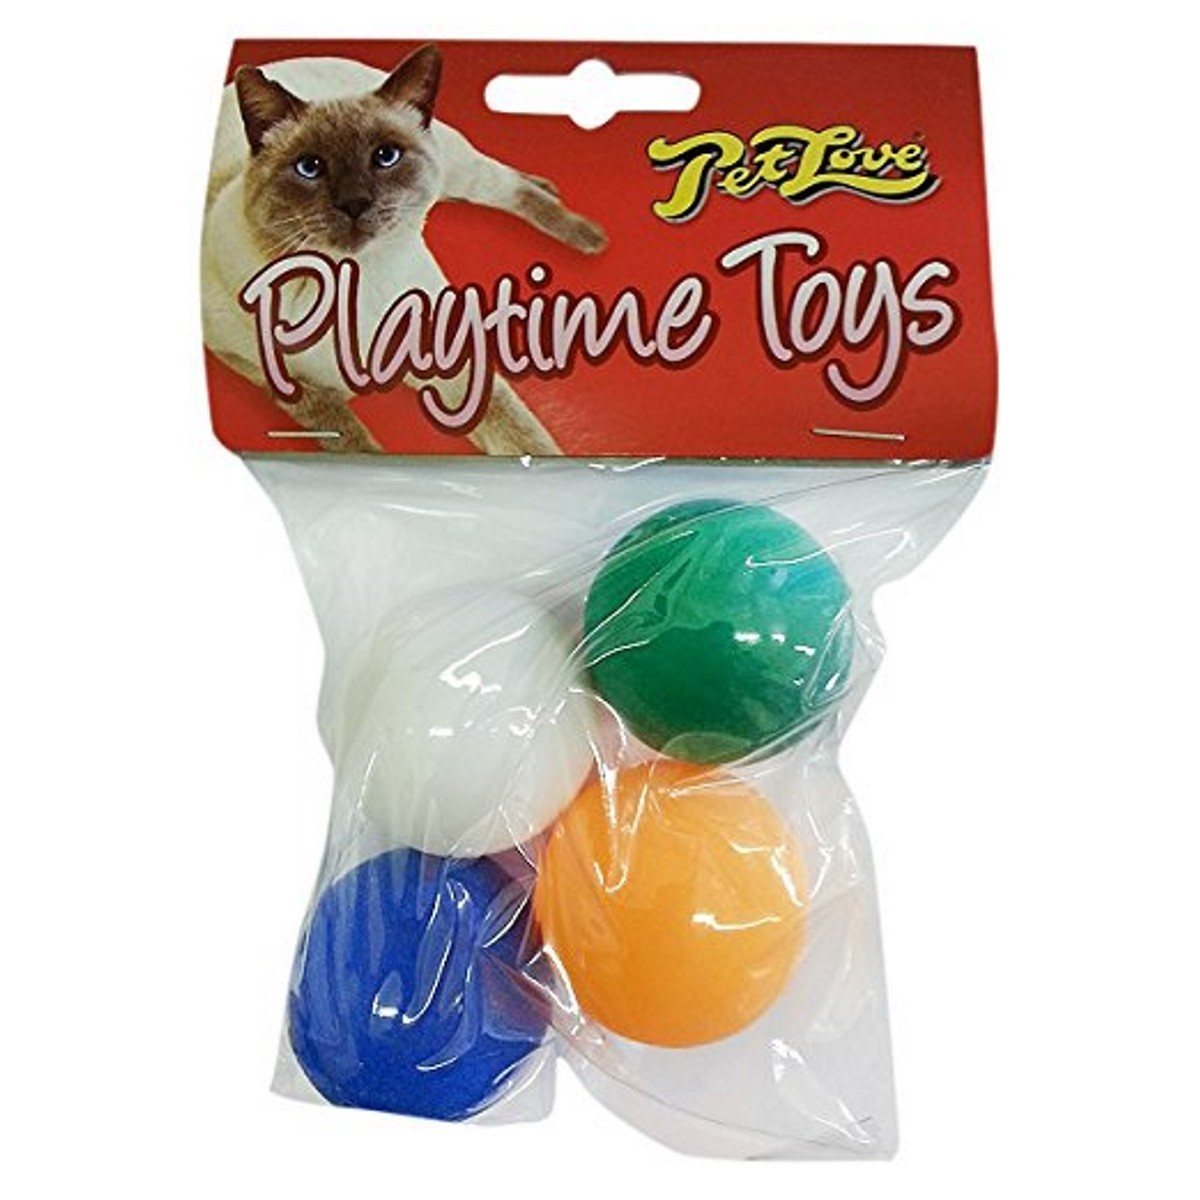 cat ball toy